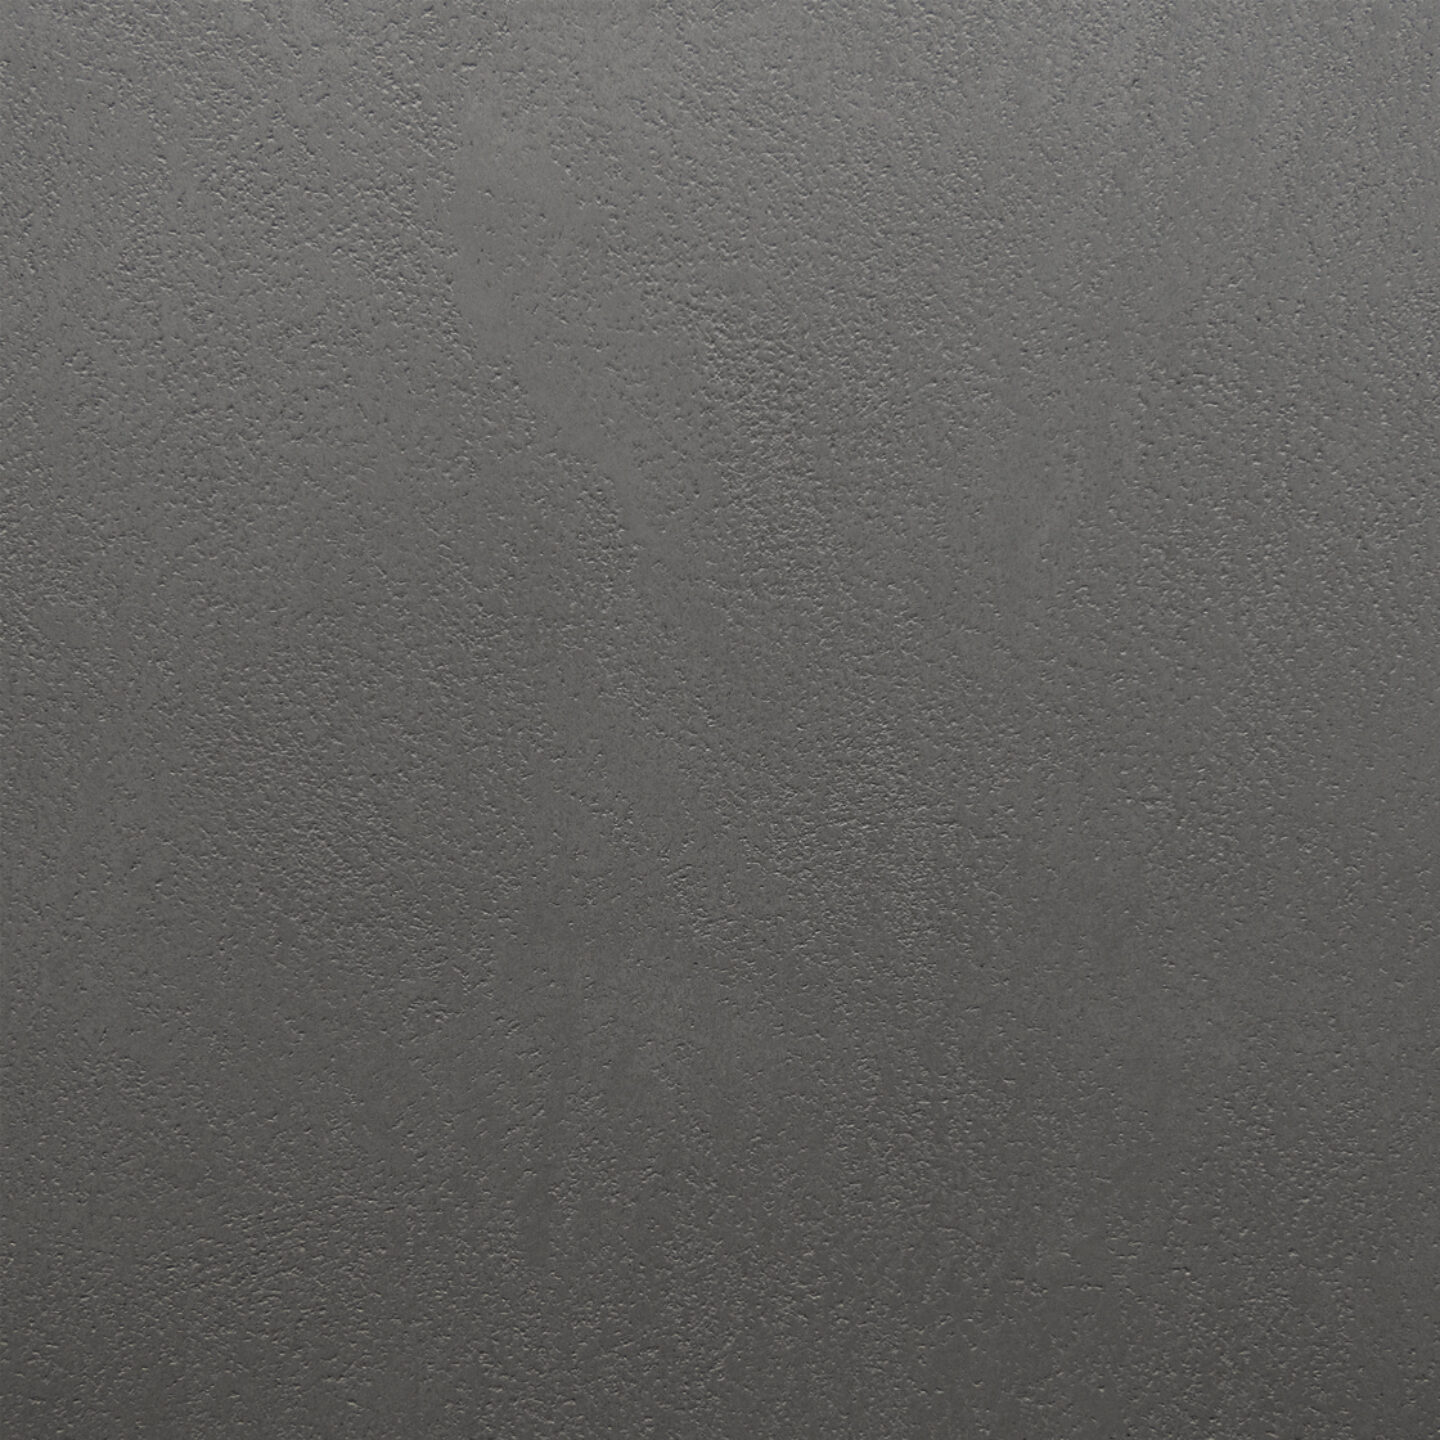 Close up of Armourcoat leatherstone exterior polished plaster finish - 44